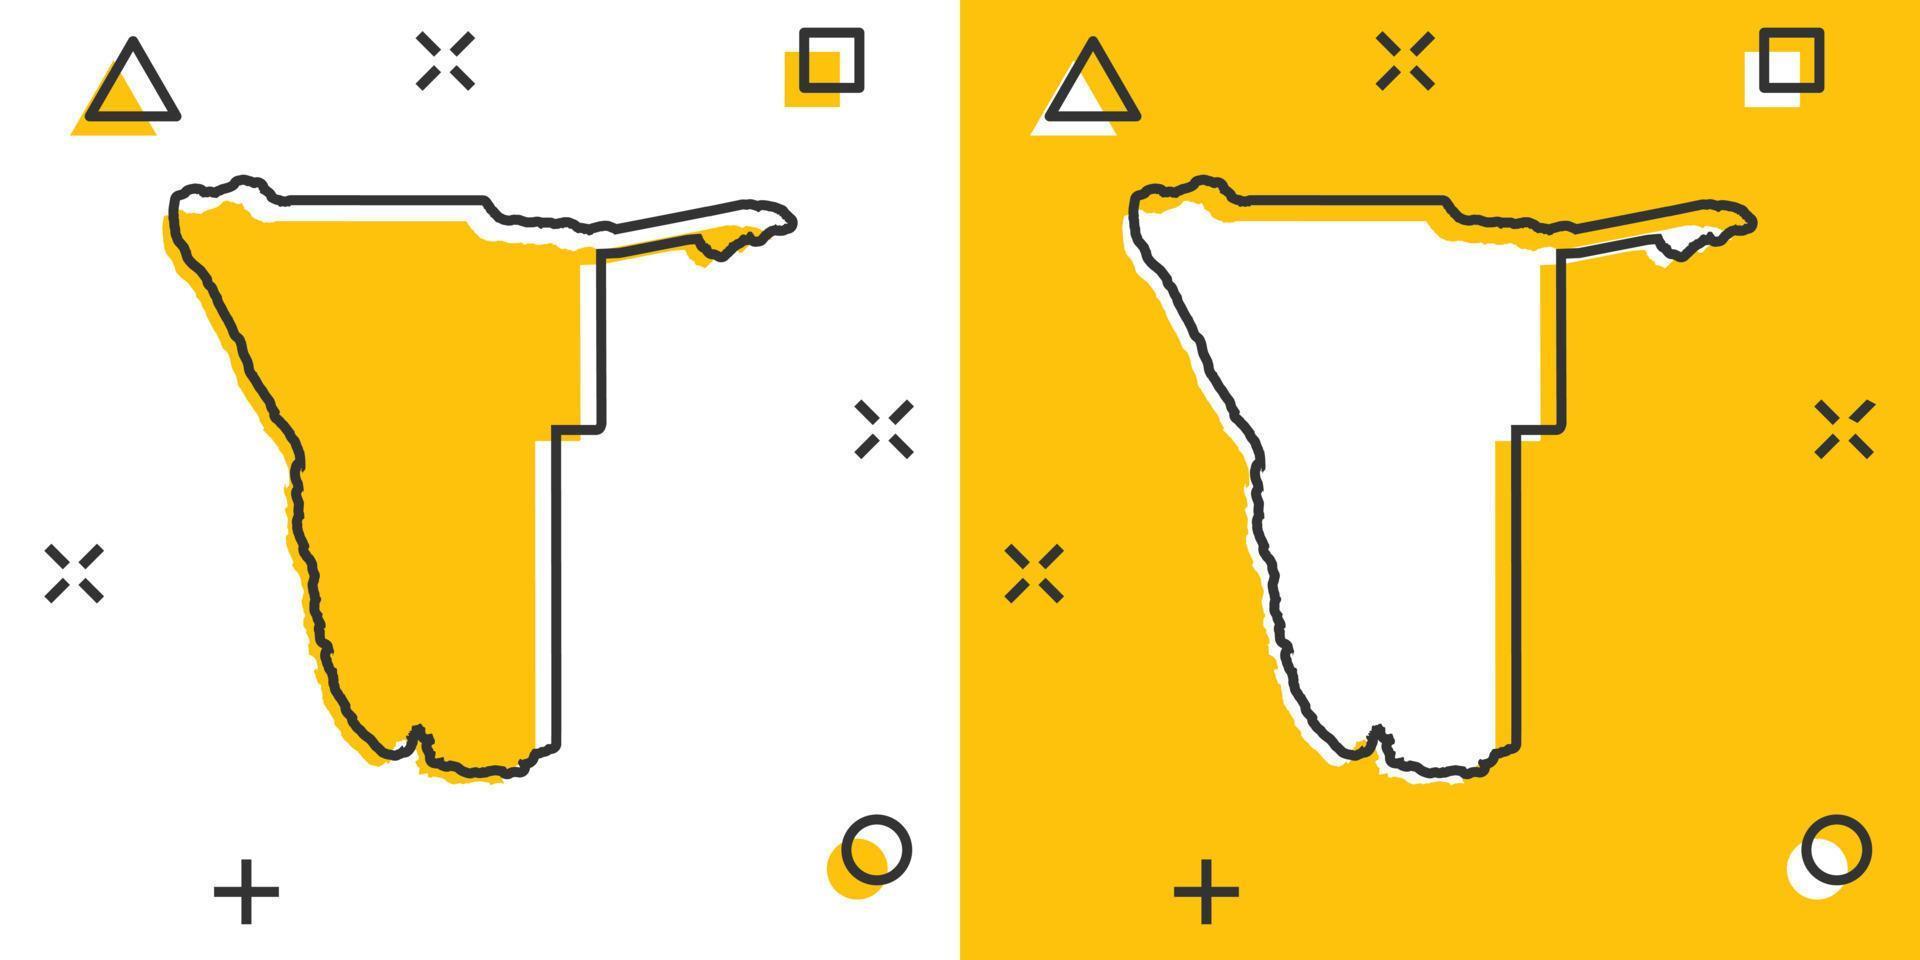 Vektor-Cartoon-Namibia-Kartensymbol im Comic-Stil. Namibia Zeichen Abbildung Piktogramm. Kartografie-Karten-Business-Splash-Effekt-Konzept. vektor